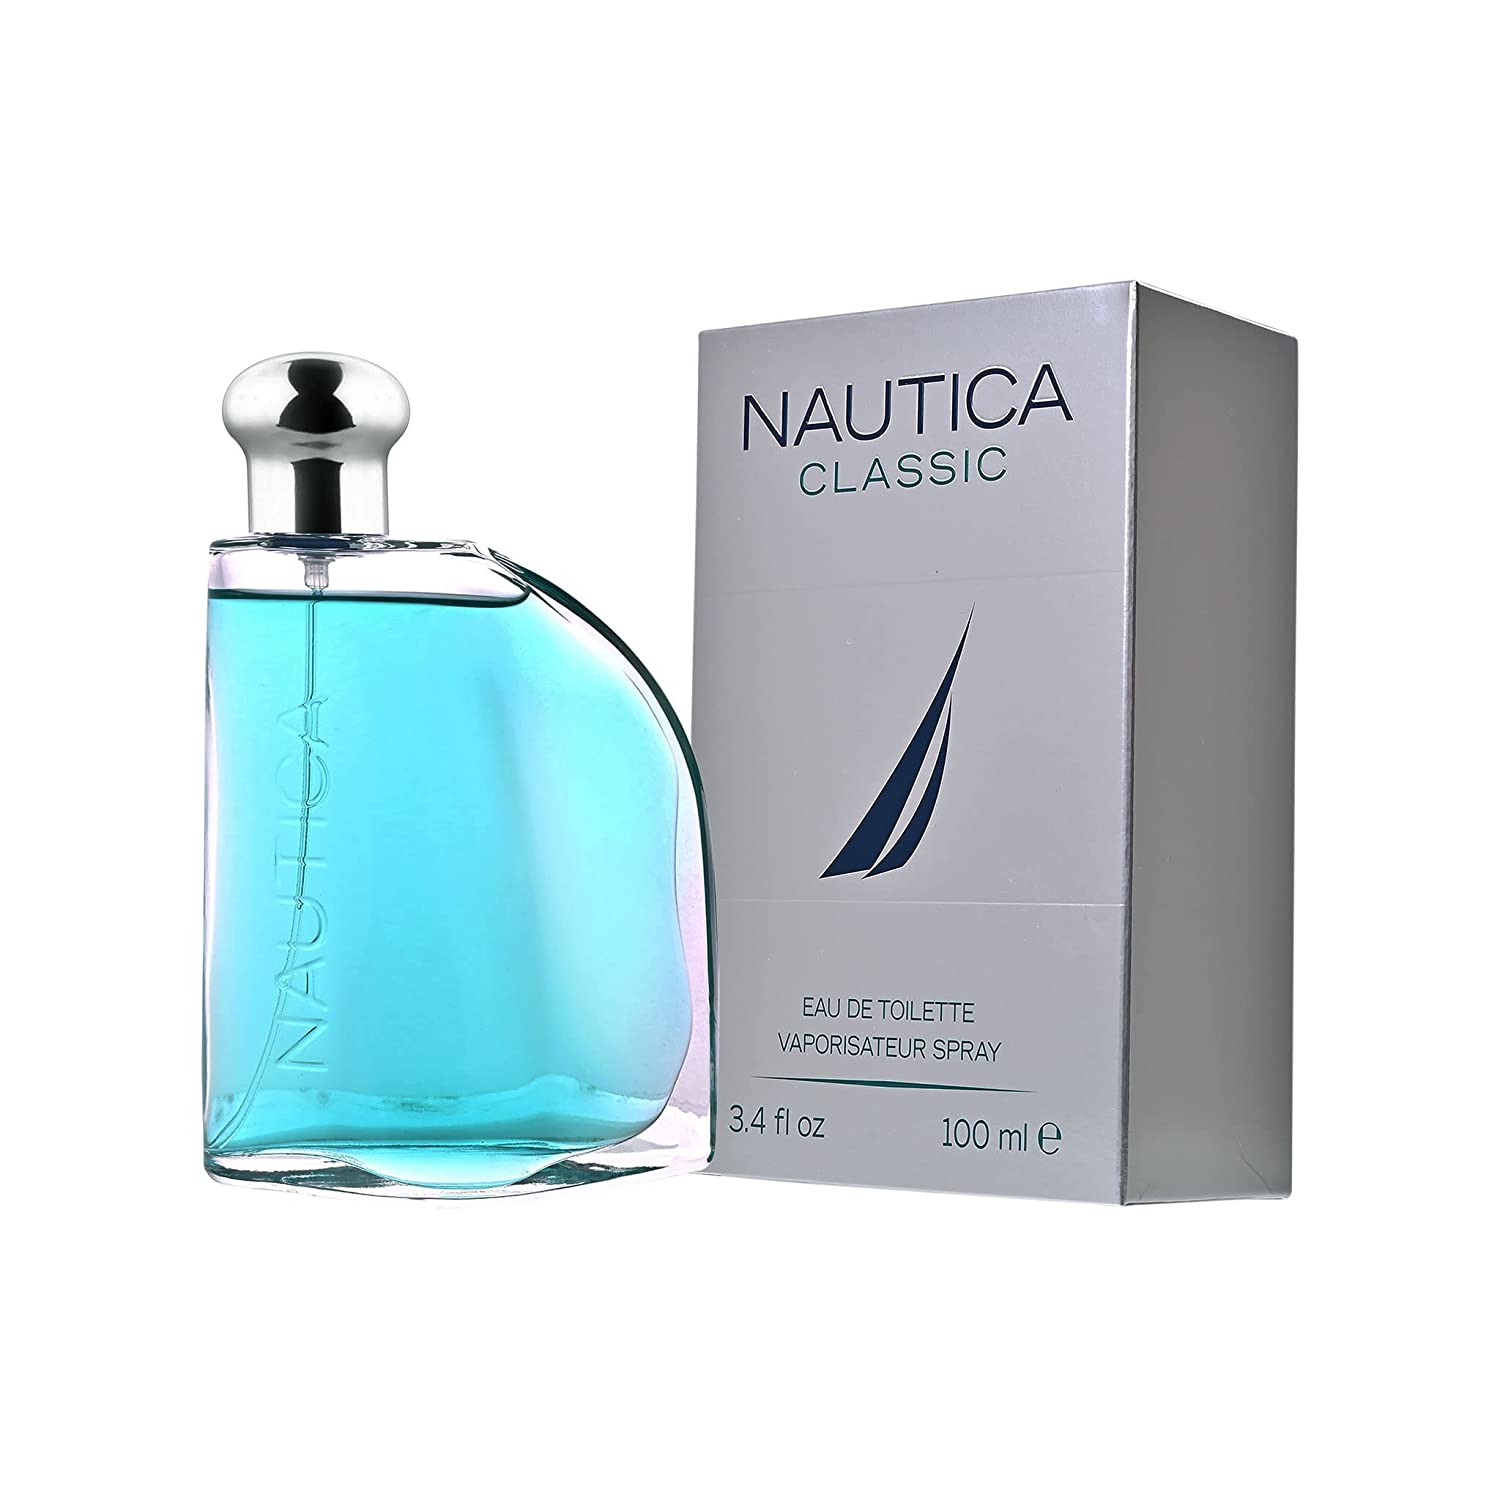 Nautica - Woman » Reviews & Perfume Facts